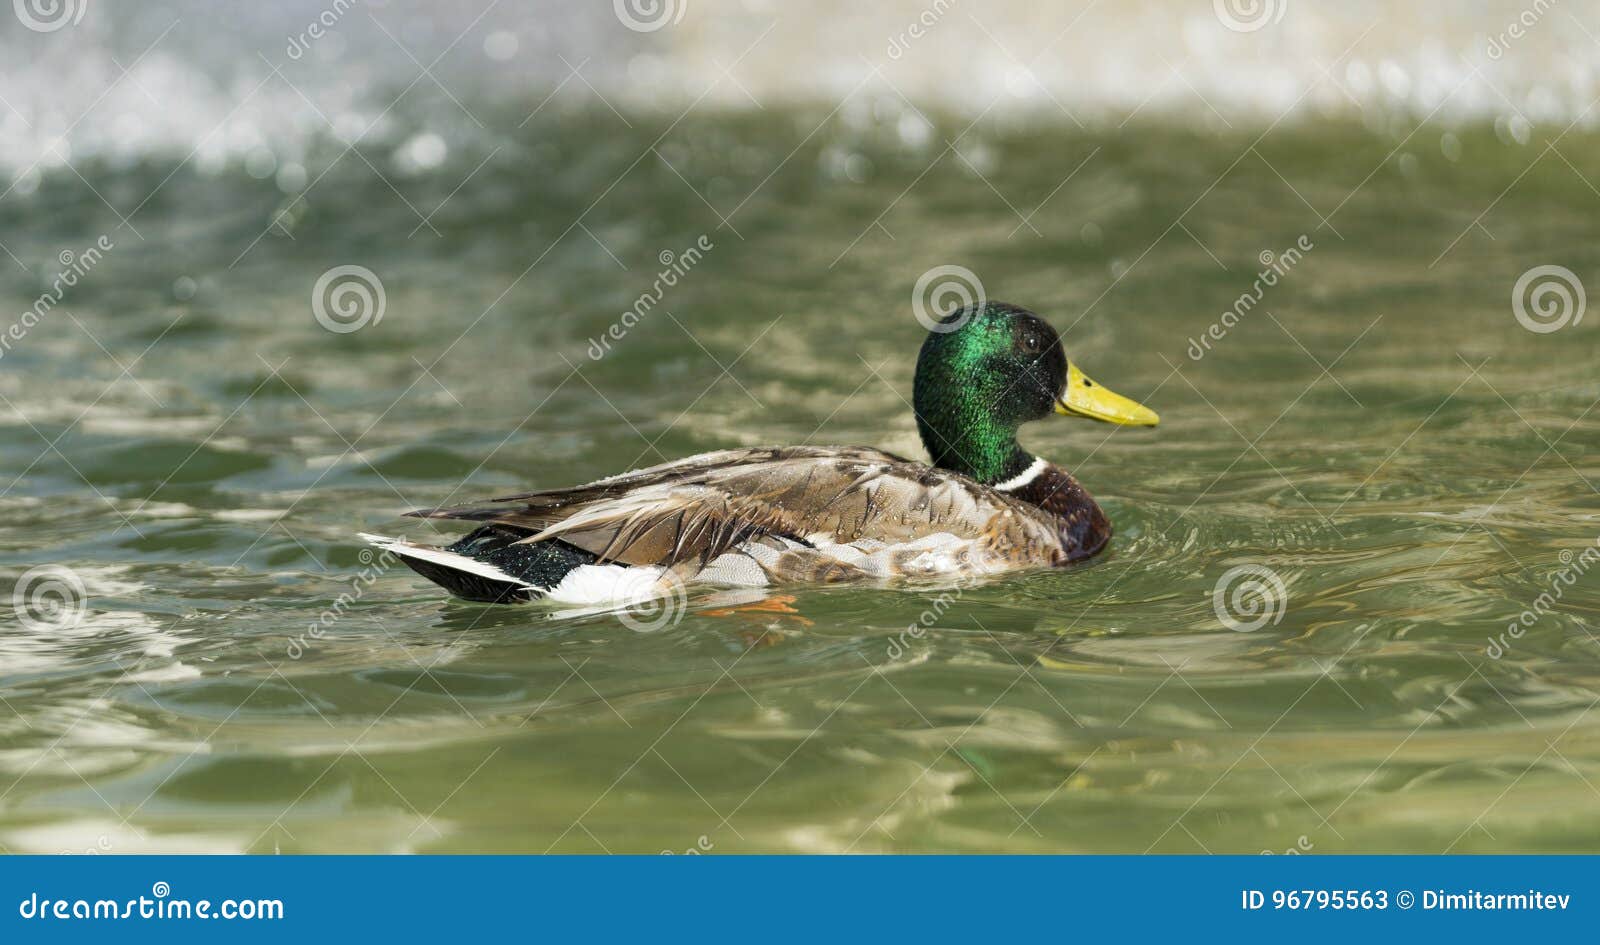 Amazing Mallard Duck Swims In Lake. Rome, Italy, June 2017 ...